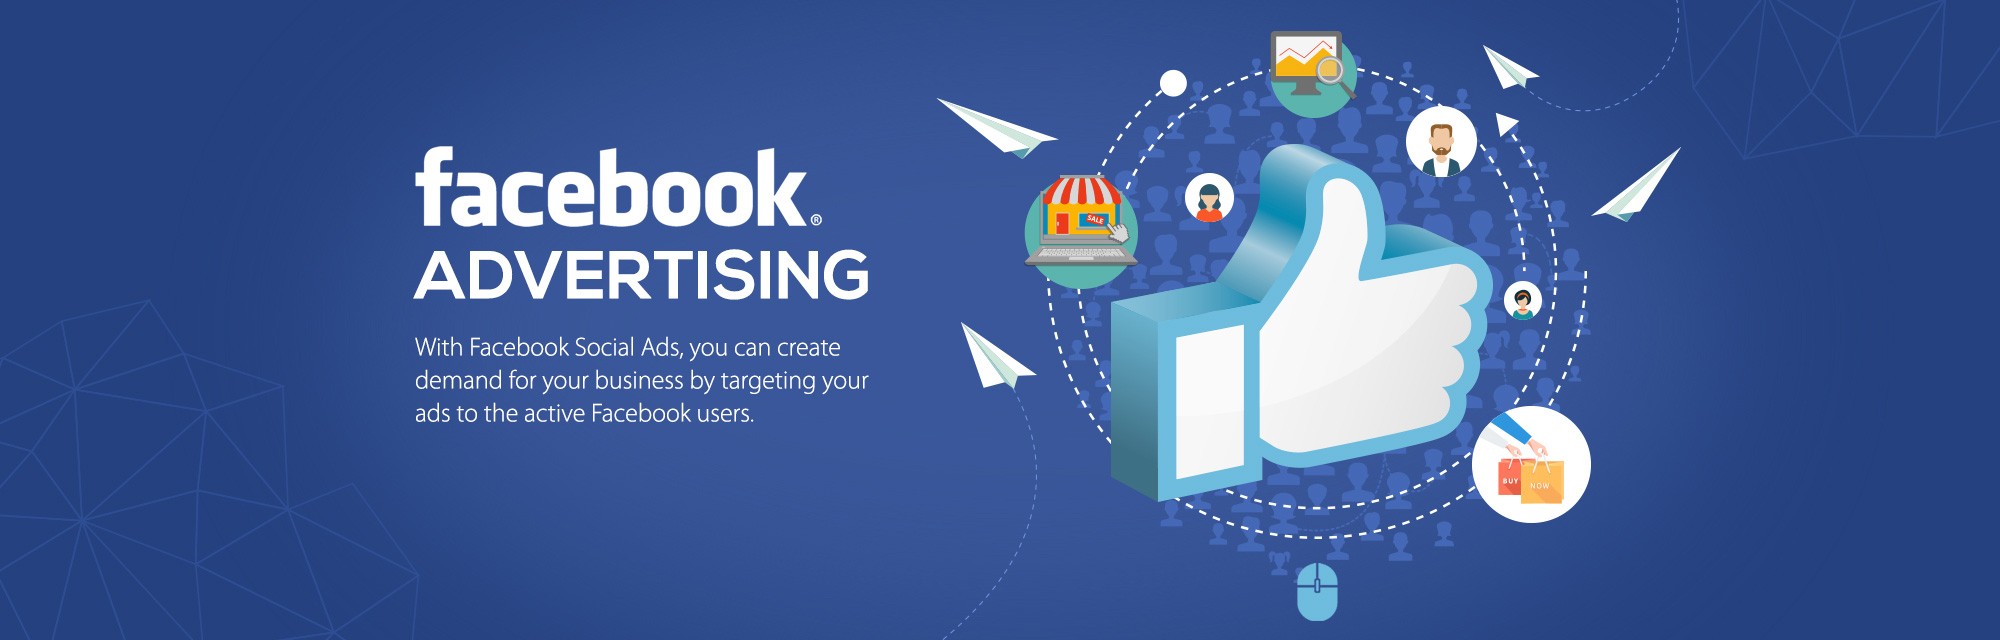 Basic Facebook Marketing & Advertising Training 